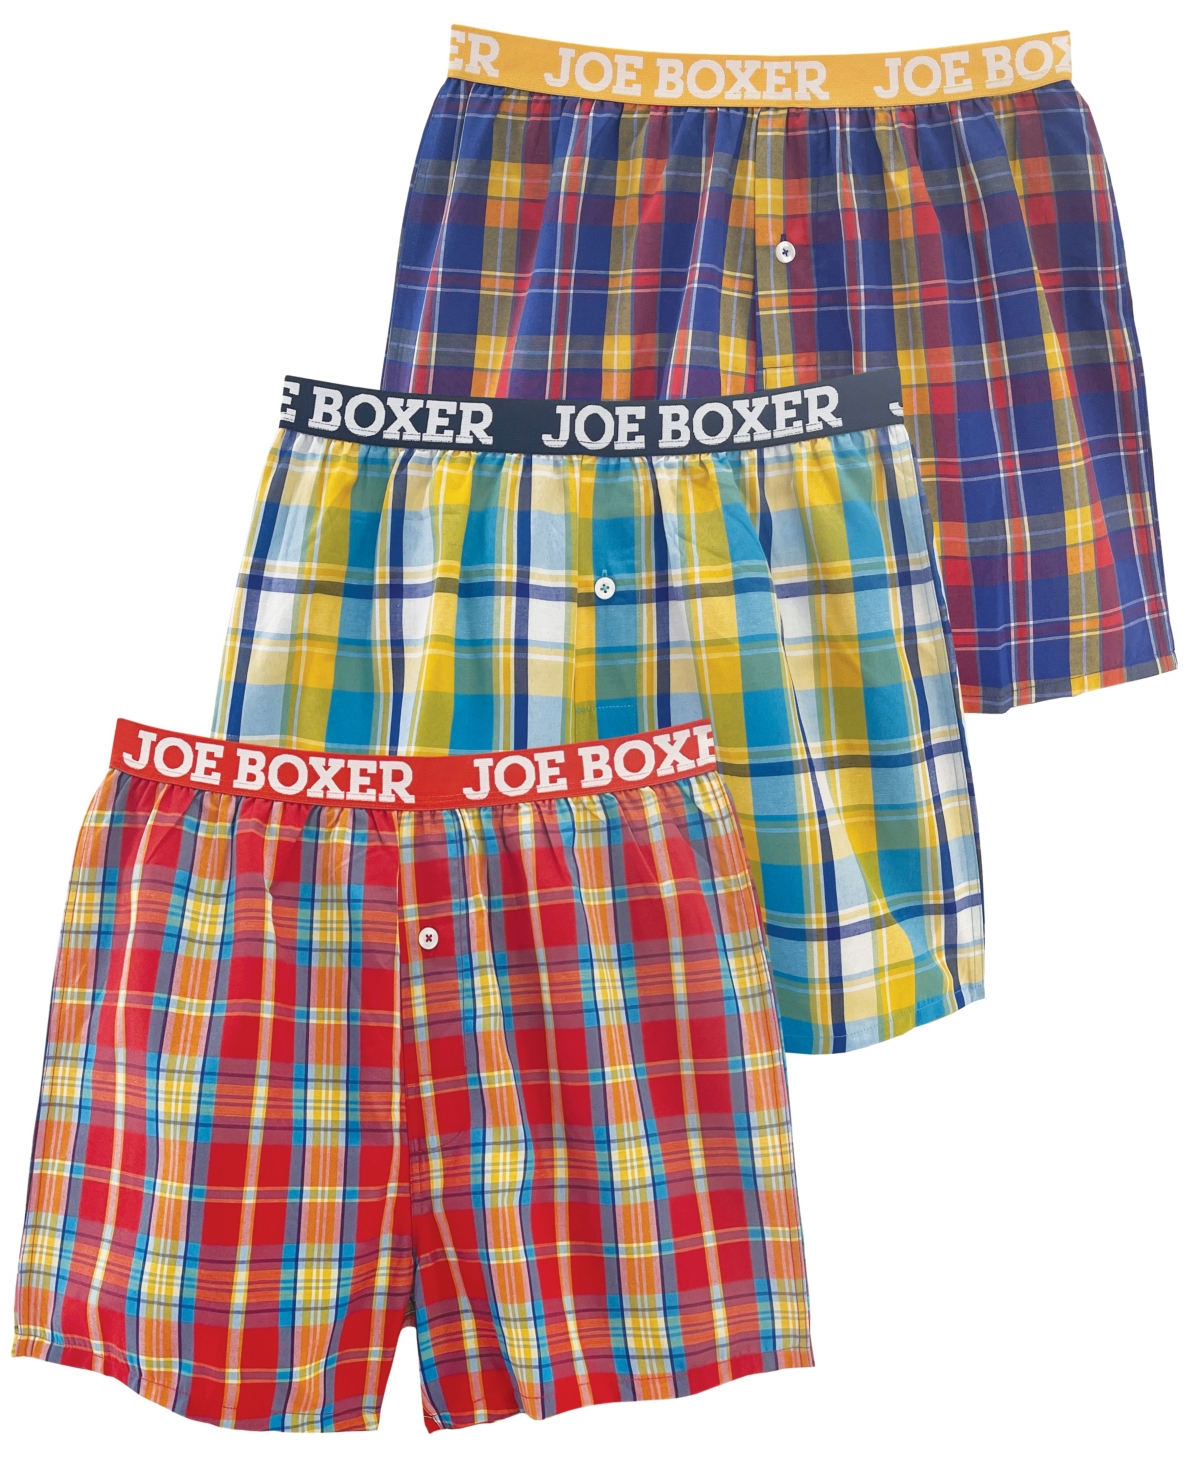 Joe Boxer Men's Bright Plaid Woven Boxers, Pack of 3